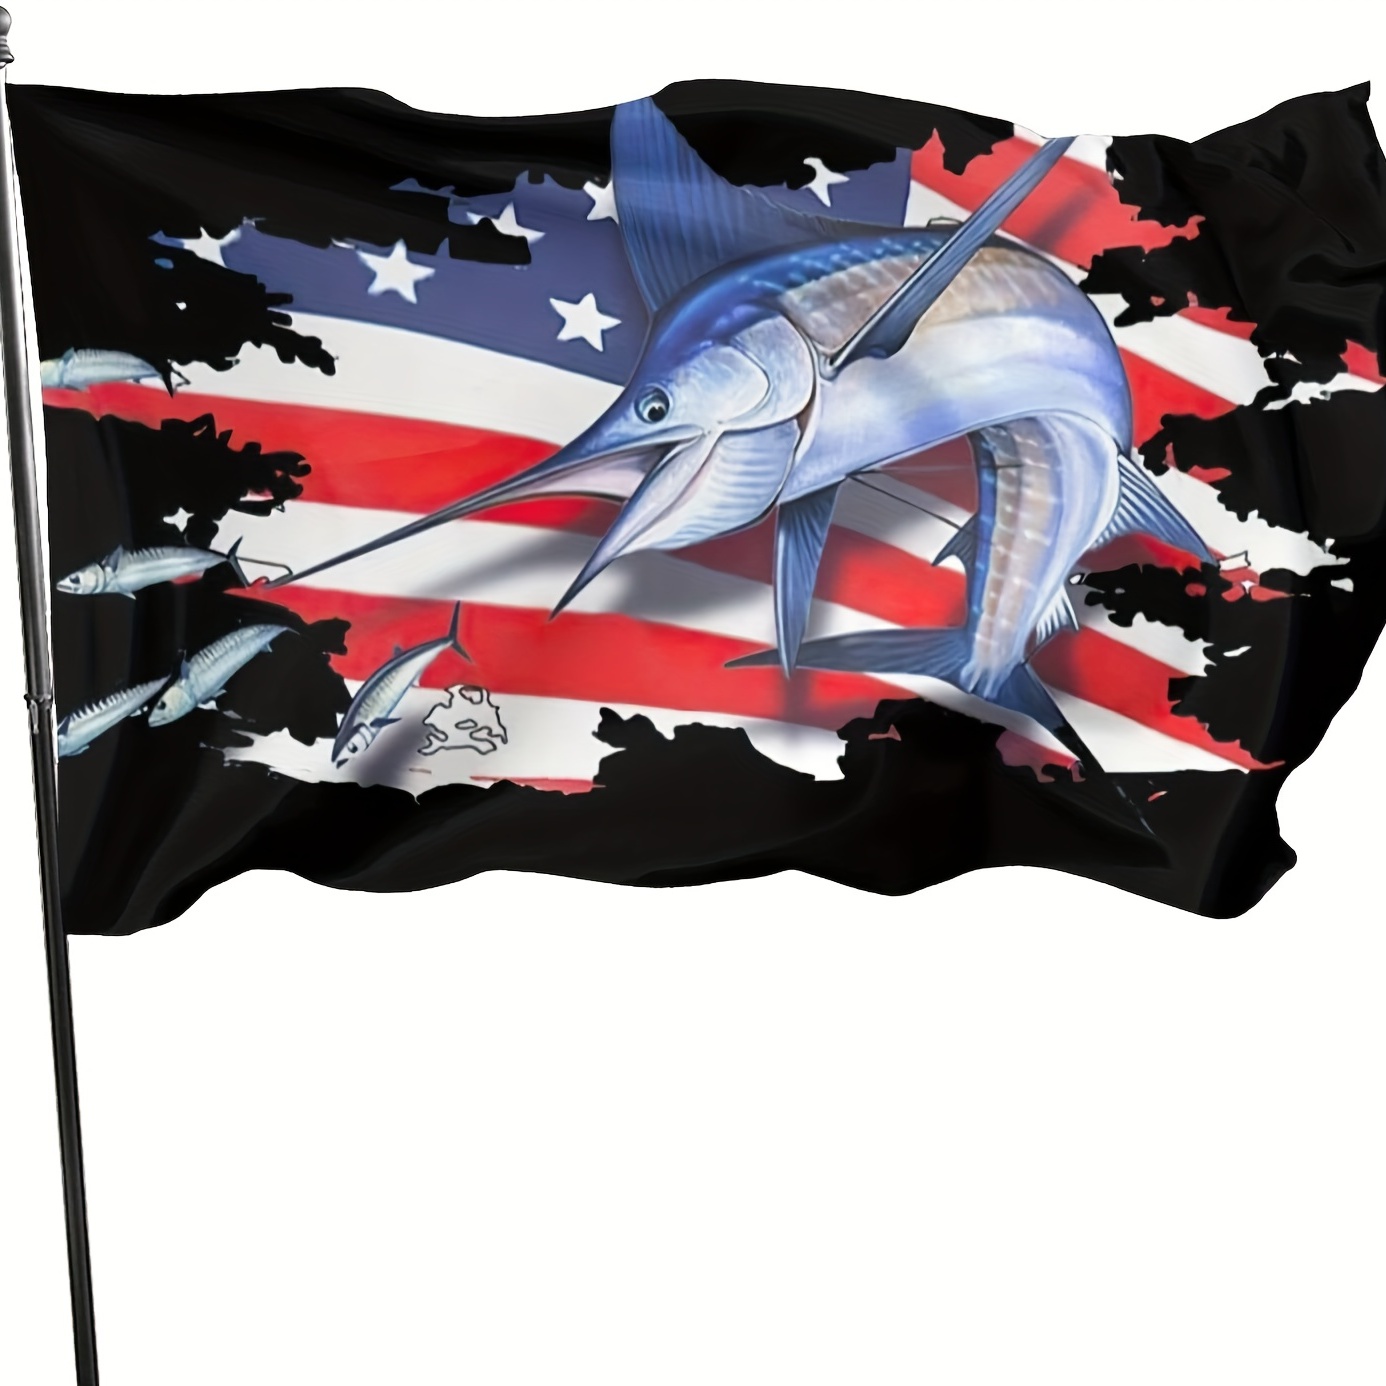 Marlin Fish Patriotic American Flag Home Garden Flag Banner Breeze